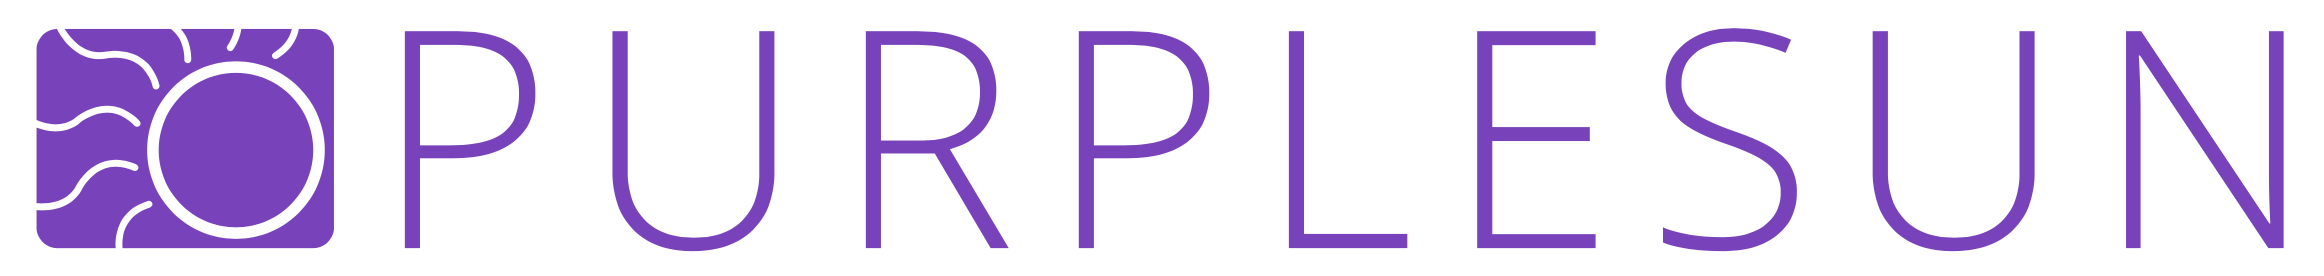 PURPLESUN Logo